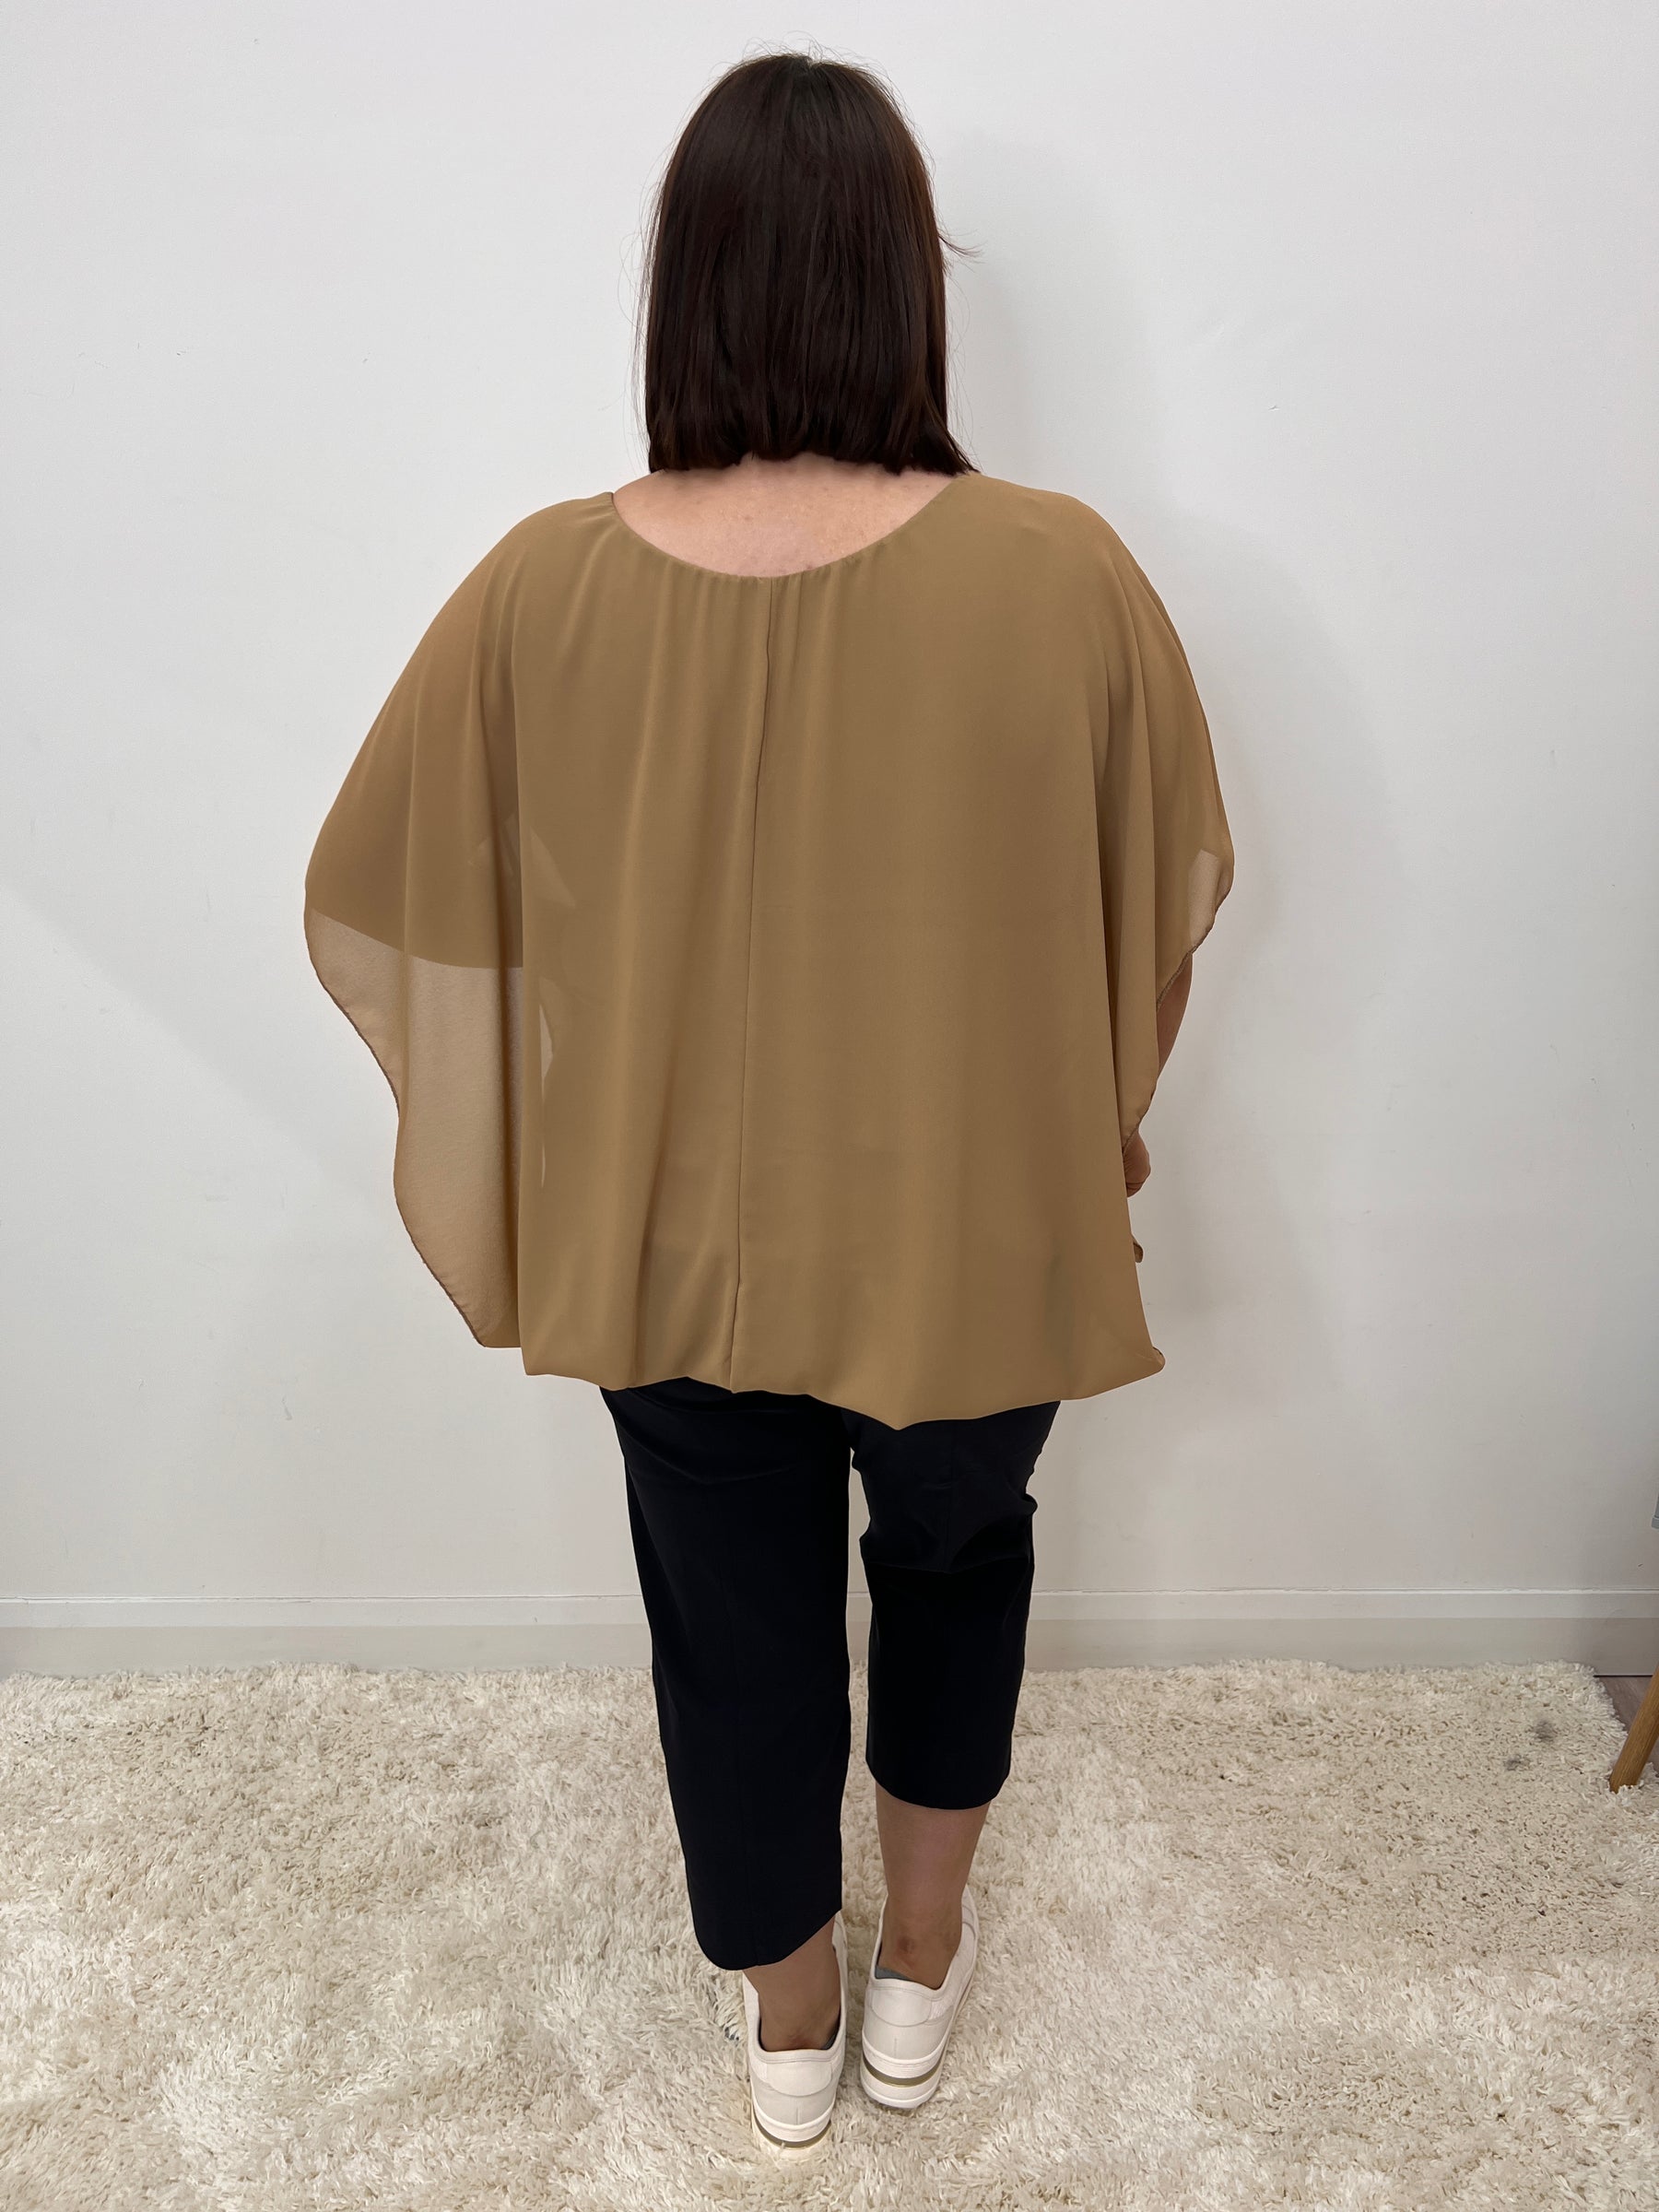 Magic Blouse in Tan - Size 2 - Wardrobe Plus